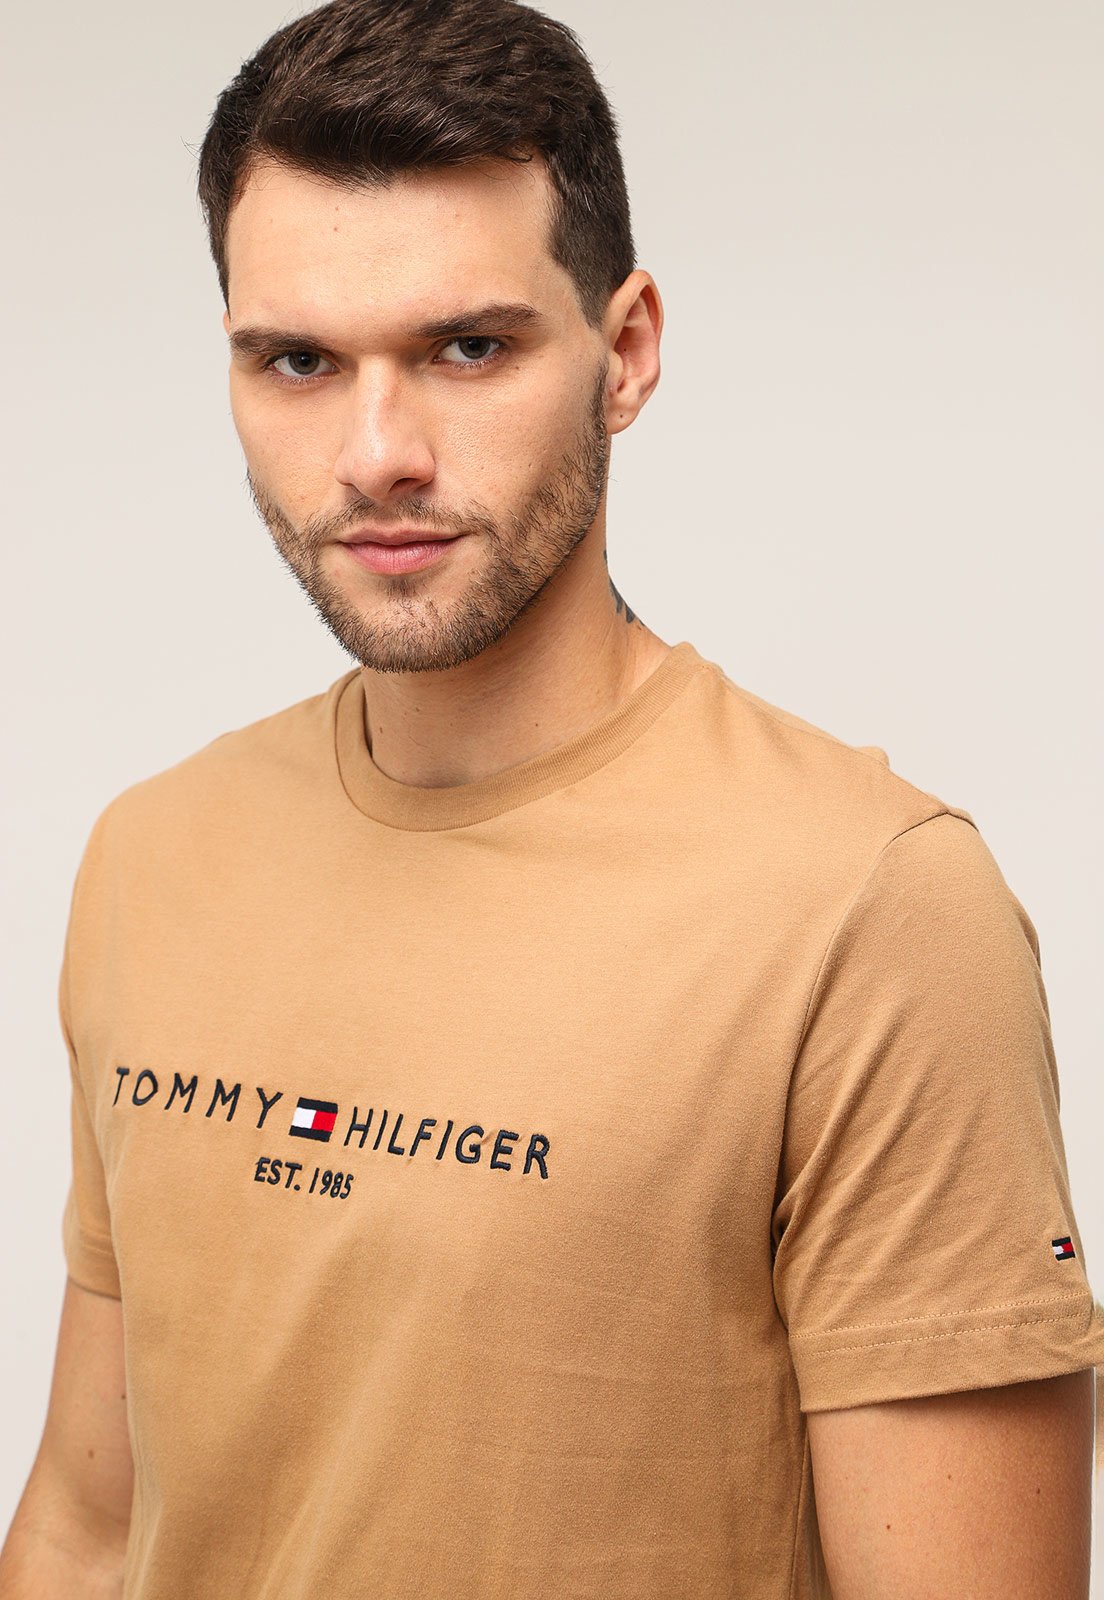 https://static.dafiti.com.br/p/Tommy-Hilfiger-Camiseta-Tommy-Hilfiger-Logo-Bordado-Bege-2554-08965431-1-zoom.jpg